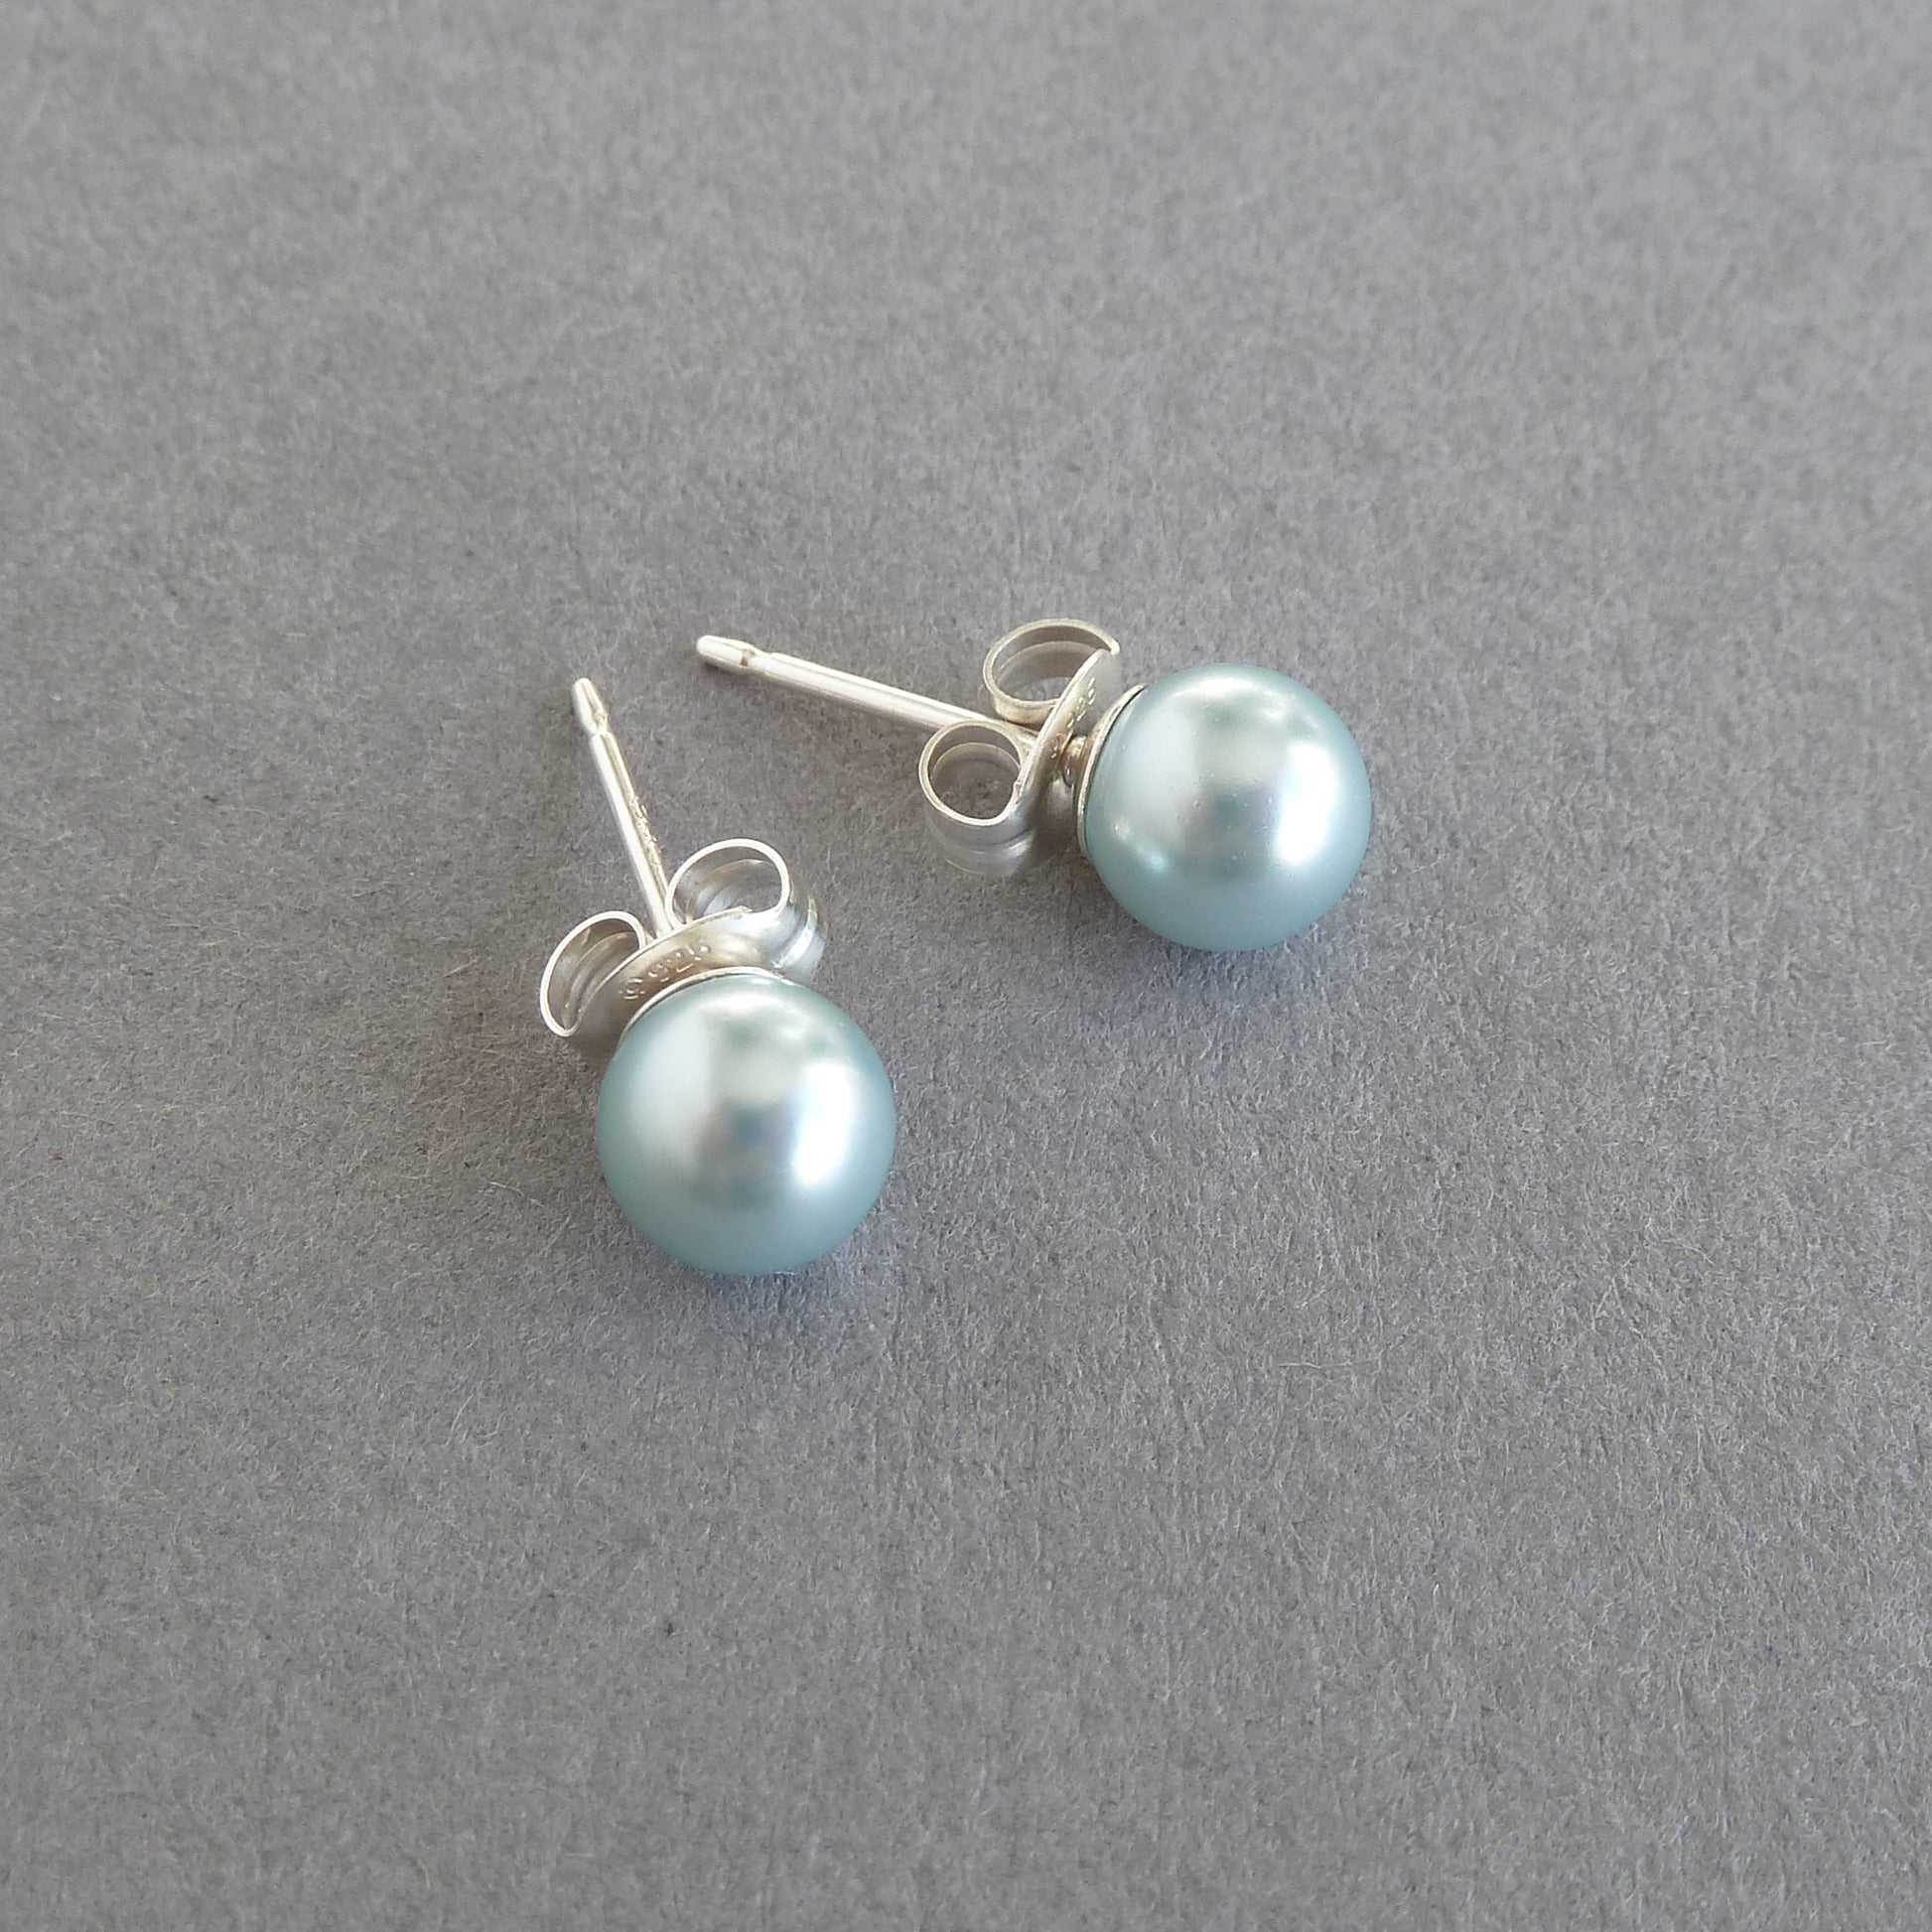 Small aqua pearl stud earrings